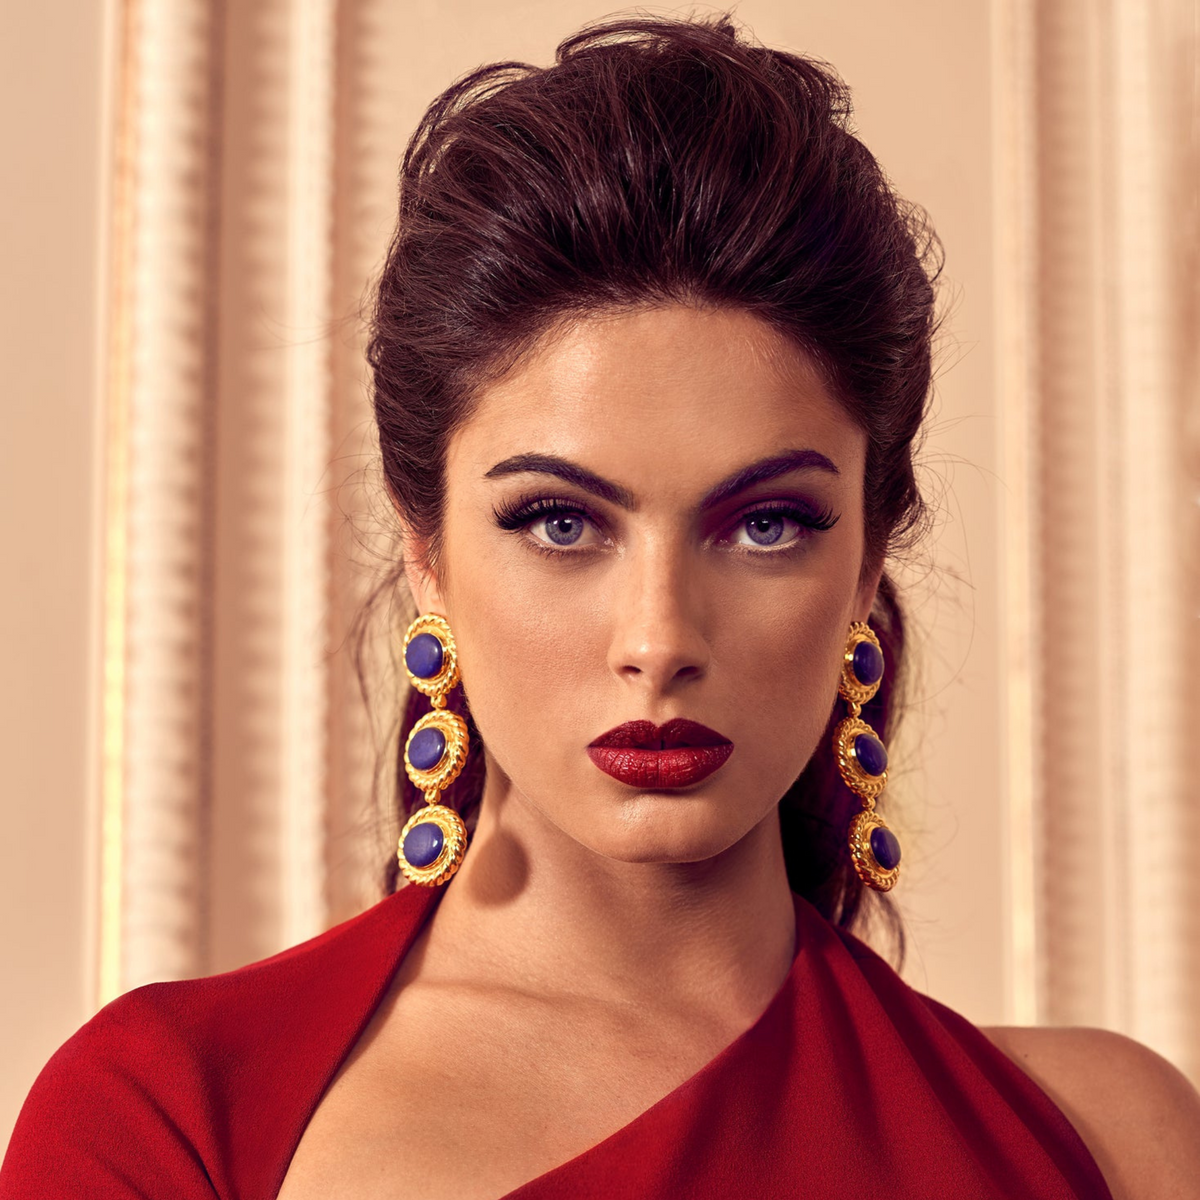 Alexandria Earrings | Gold Lapis